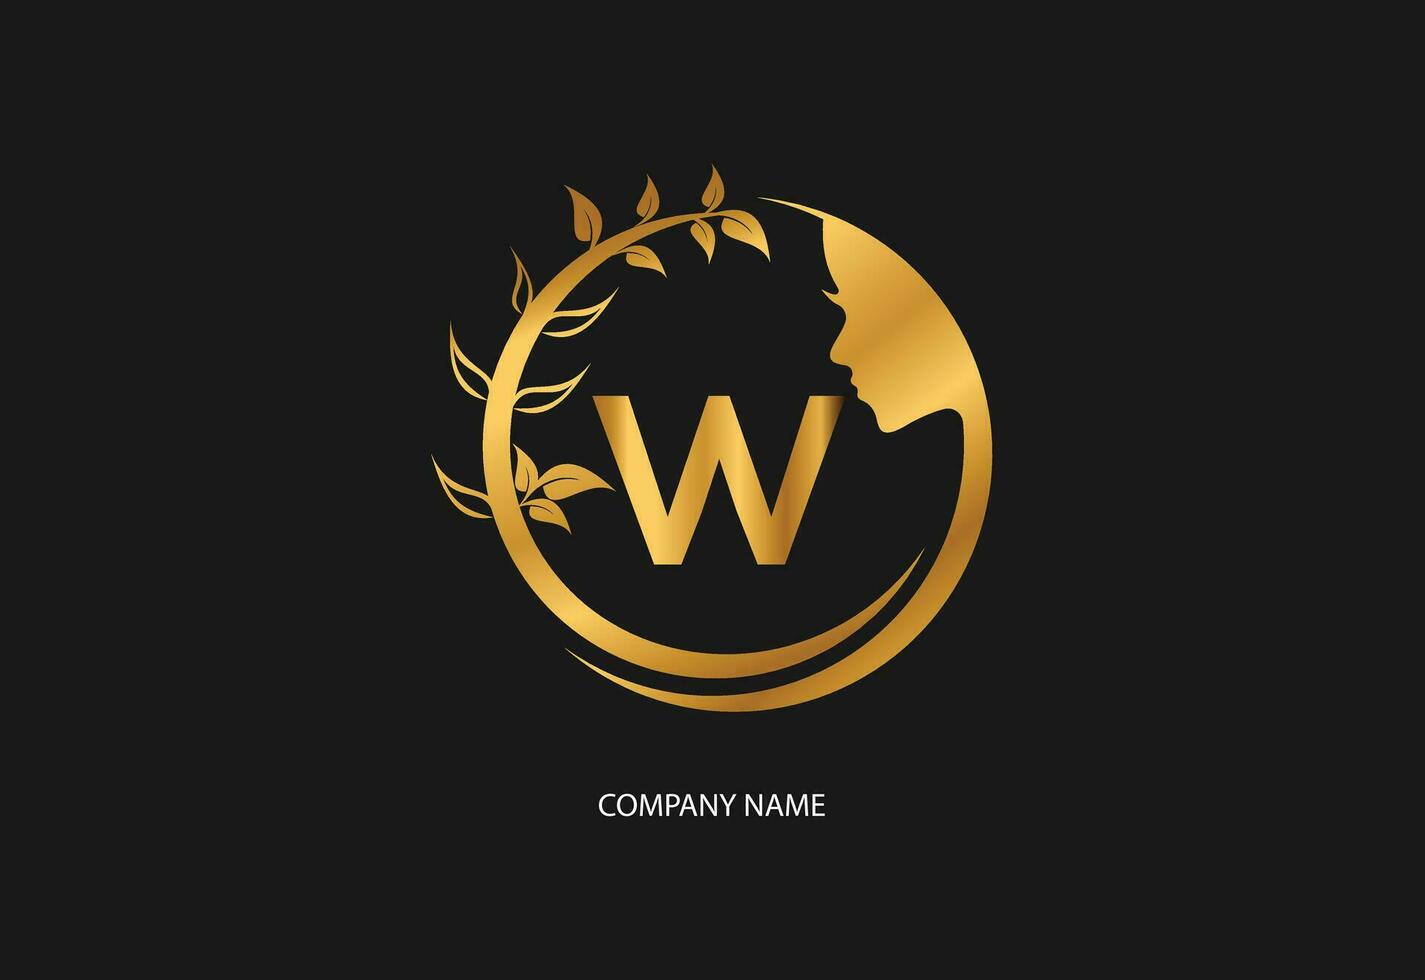 belleza logo inicial letra w con dorado estilo color y hoja. natural belleza logo modelo vector